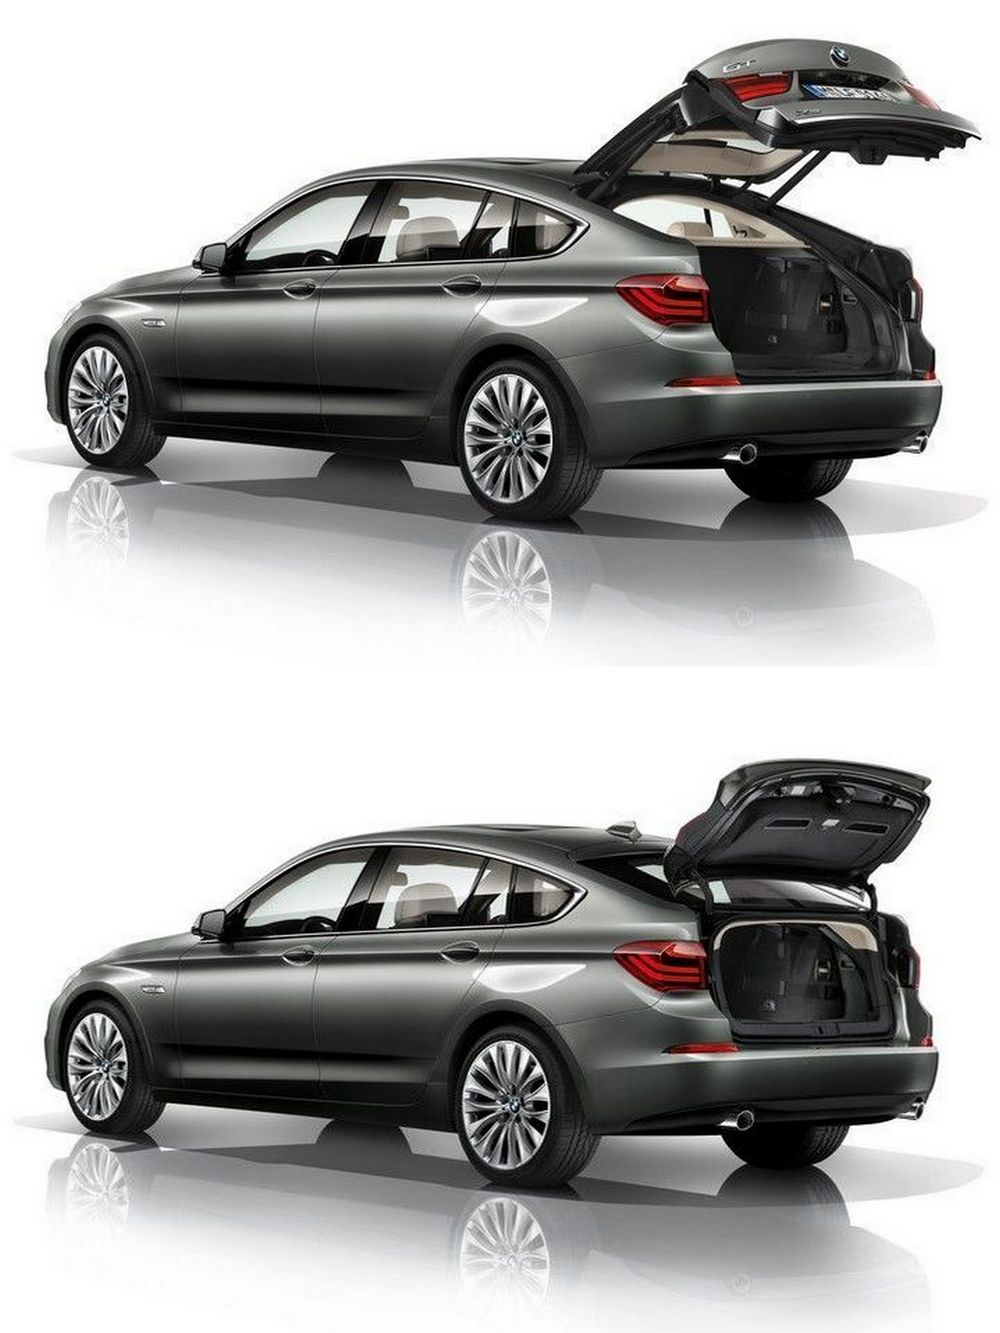 BMW 5 Series Gran Turismo — багажник, два варианта открытия задней двери